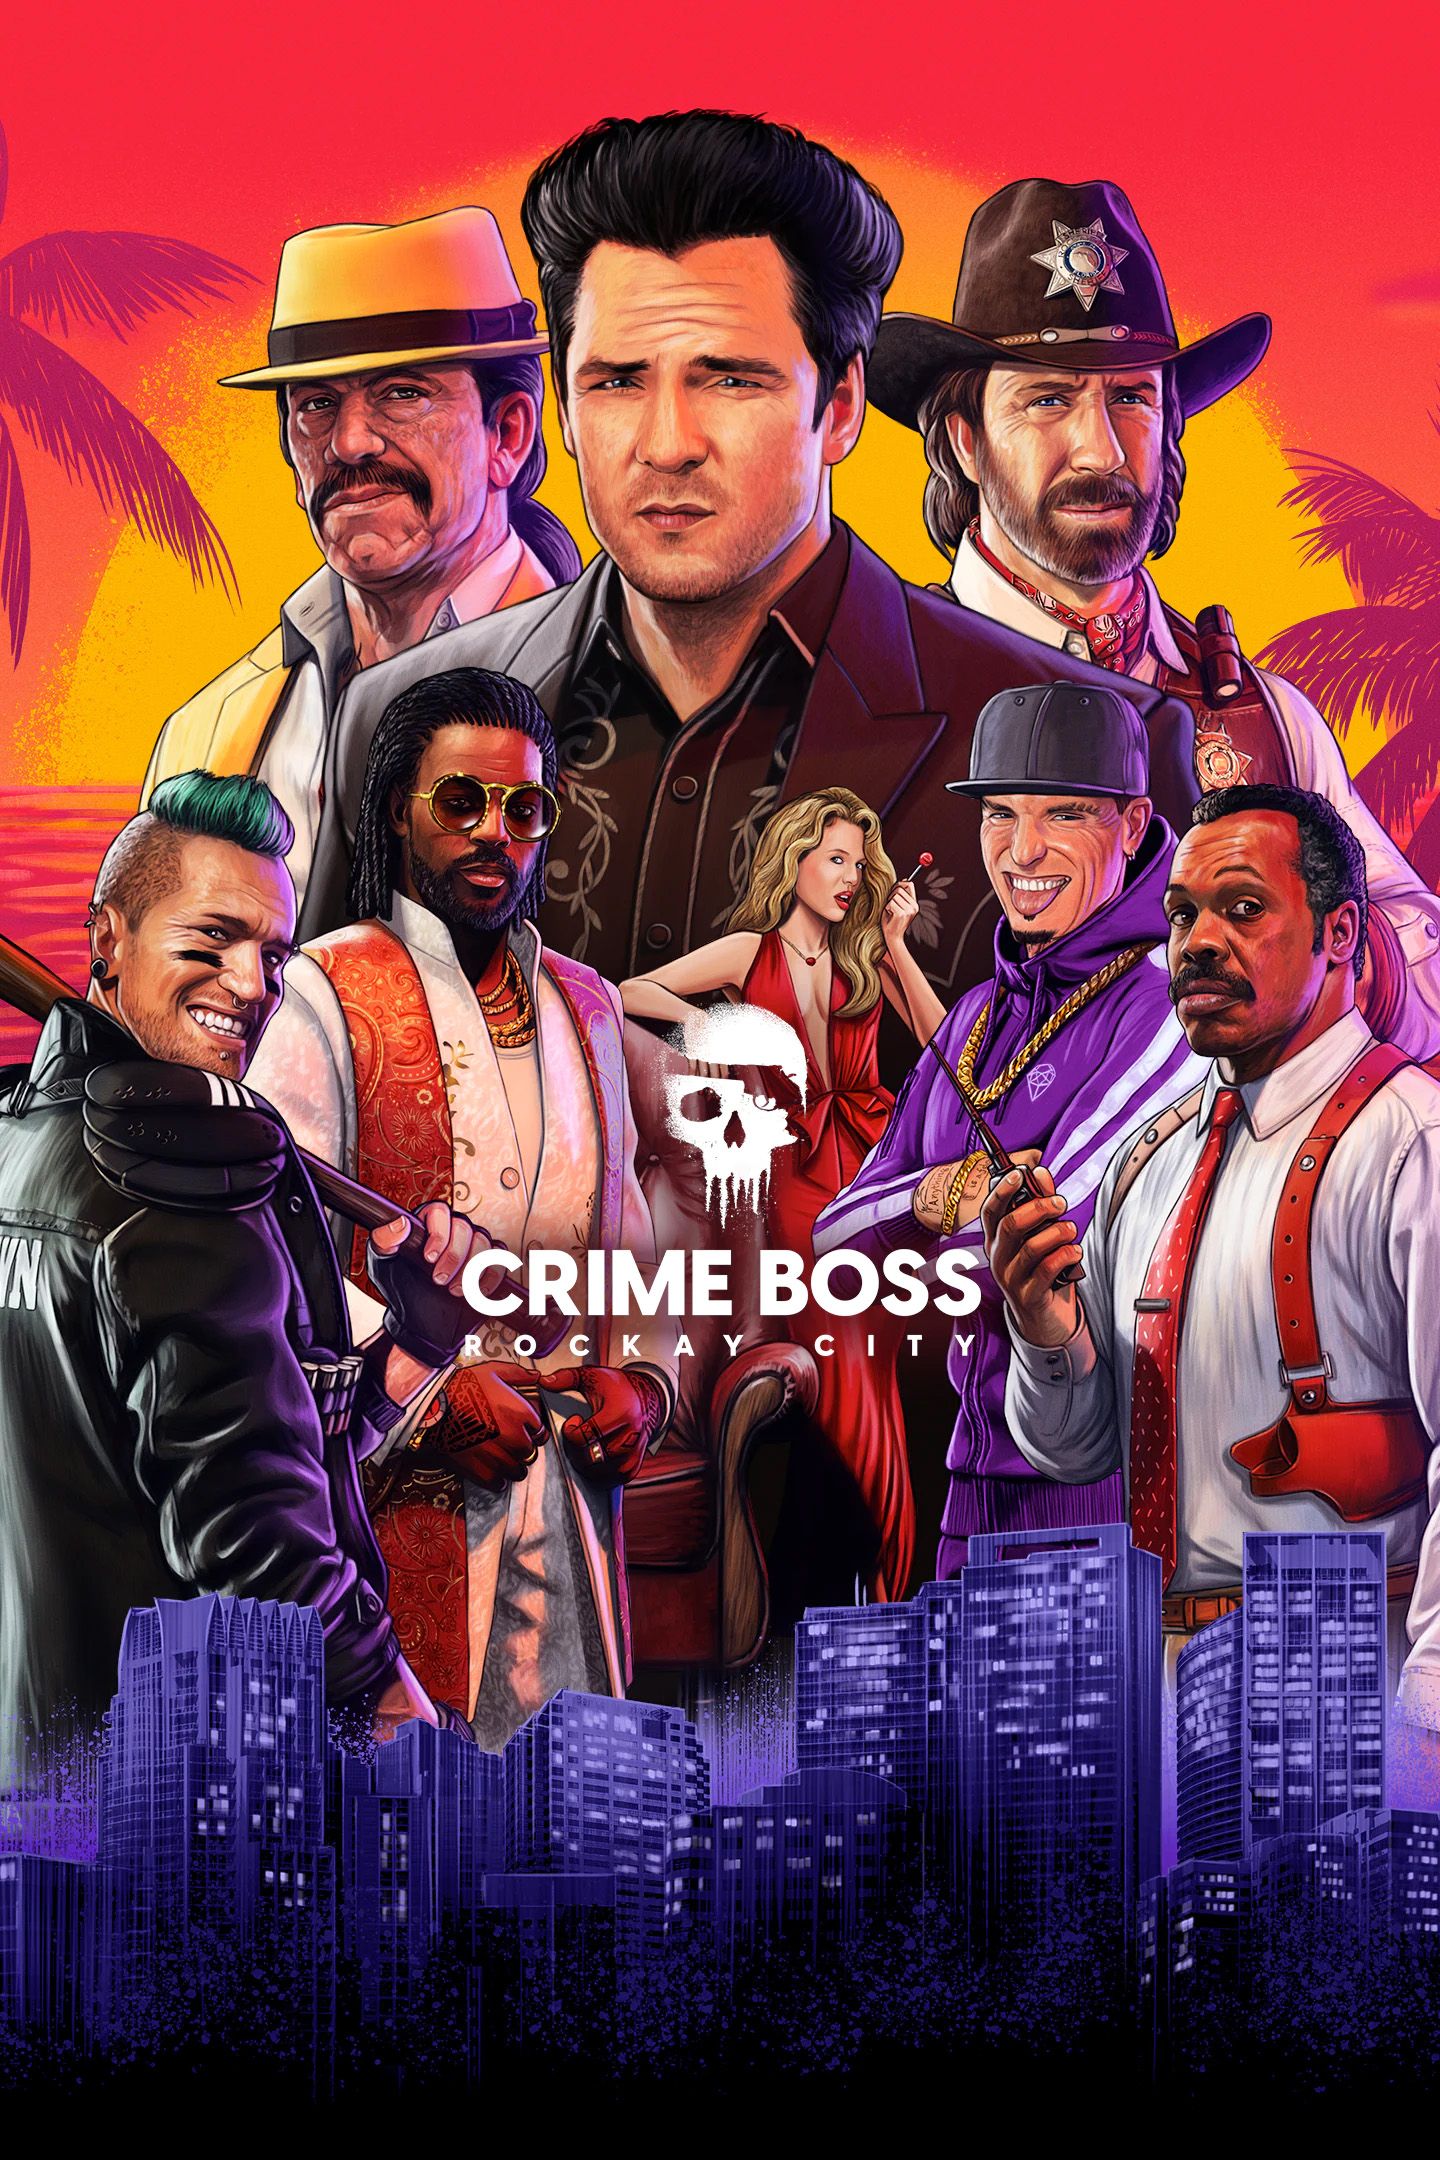 crime boss rockay city gamepass